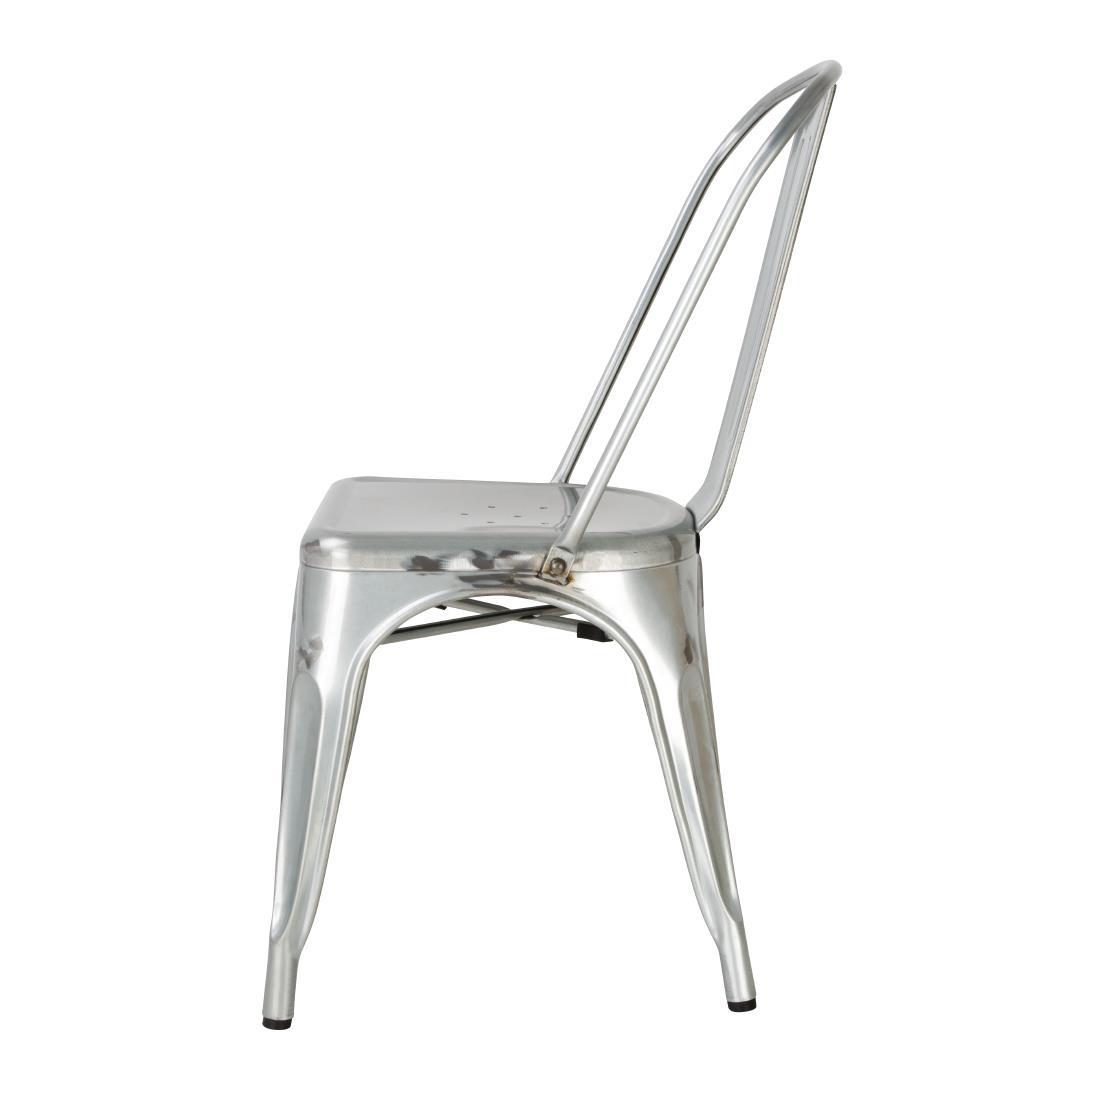 Bolero Bistro Galvanised Steel Side Chairs (Pack of 4) - GL338  - 2